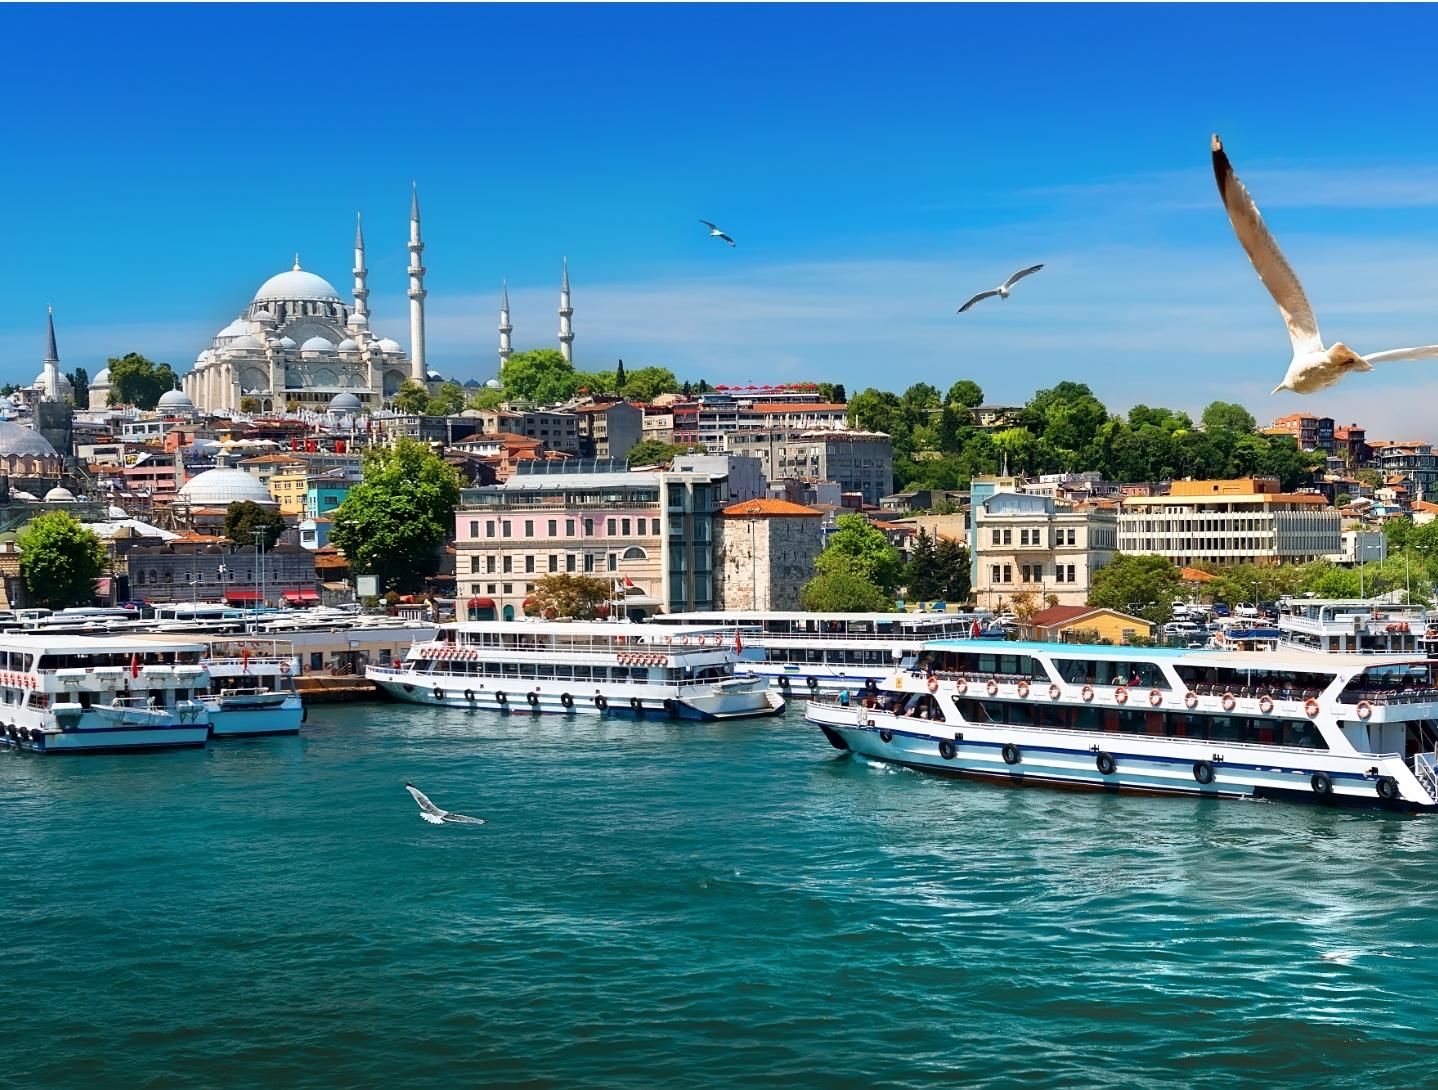 Bosphorus cruise